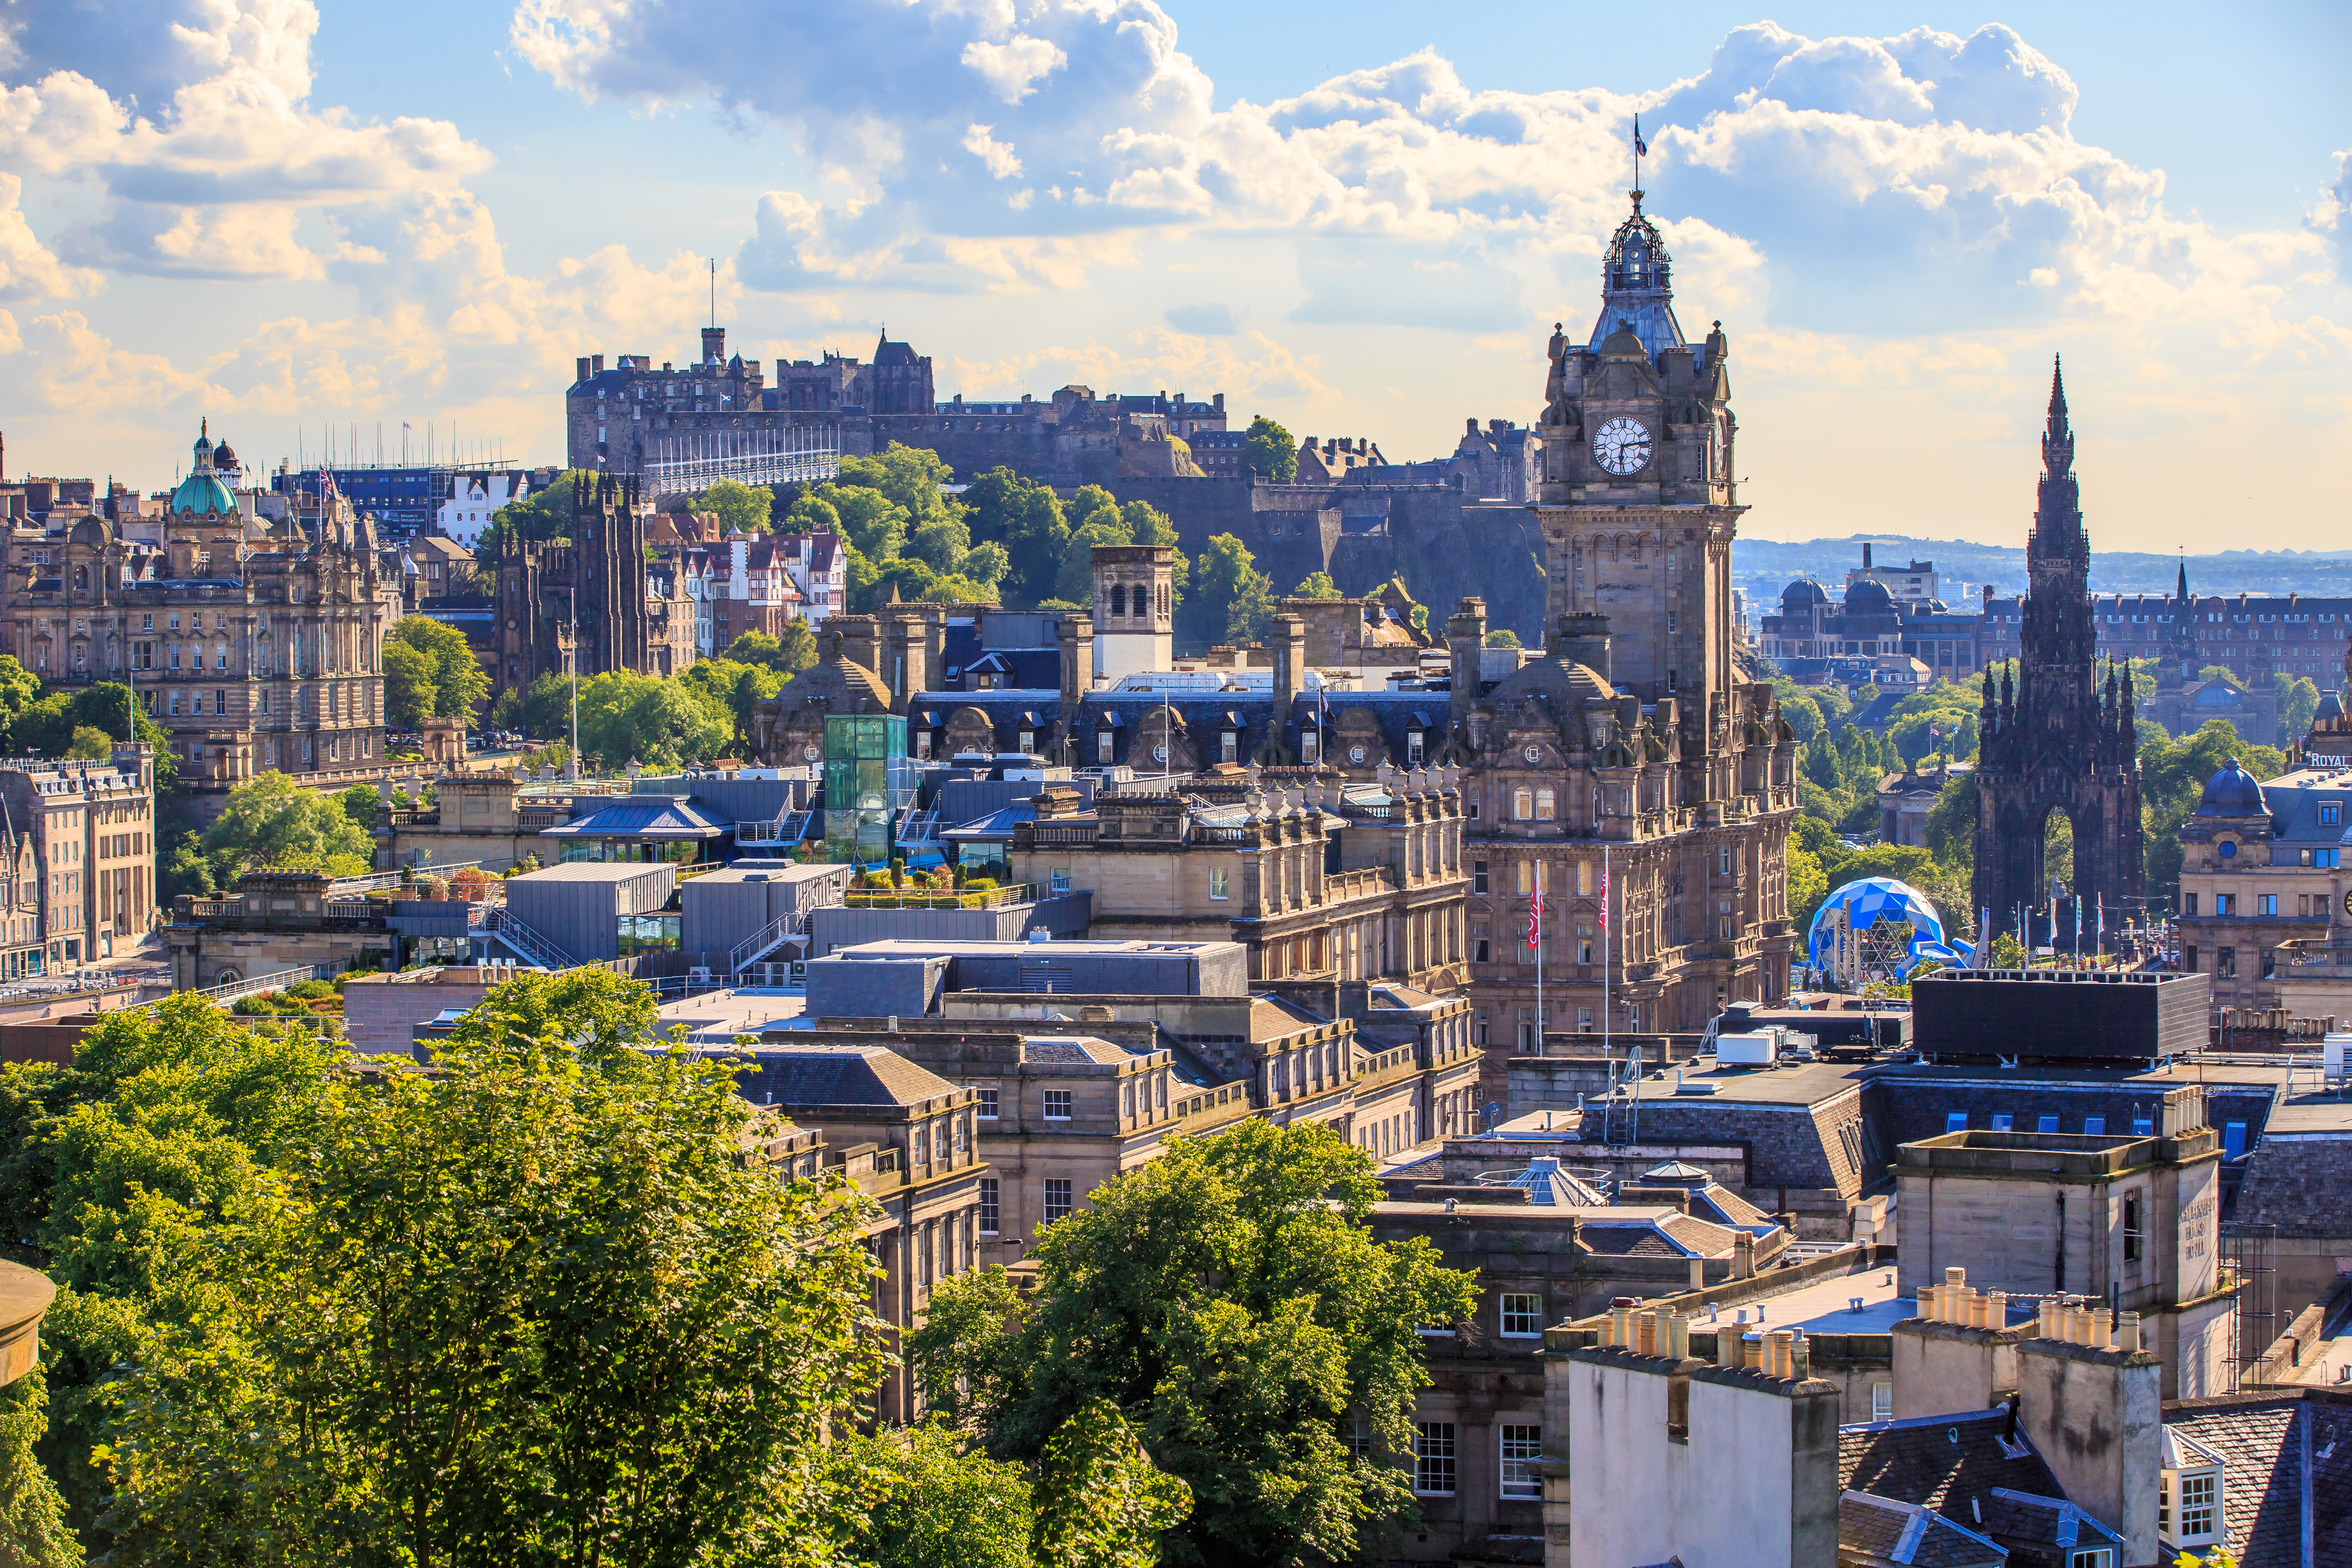 Edinburgh (Getty Images)